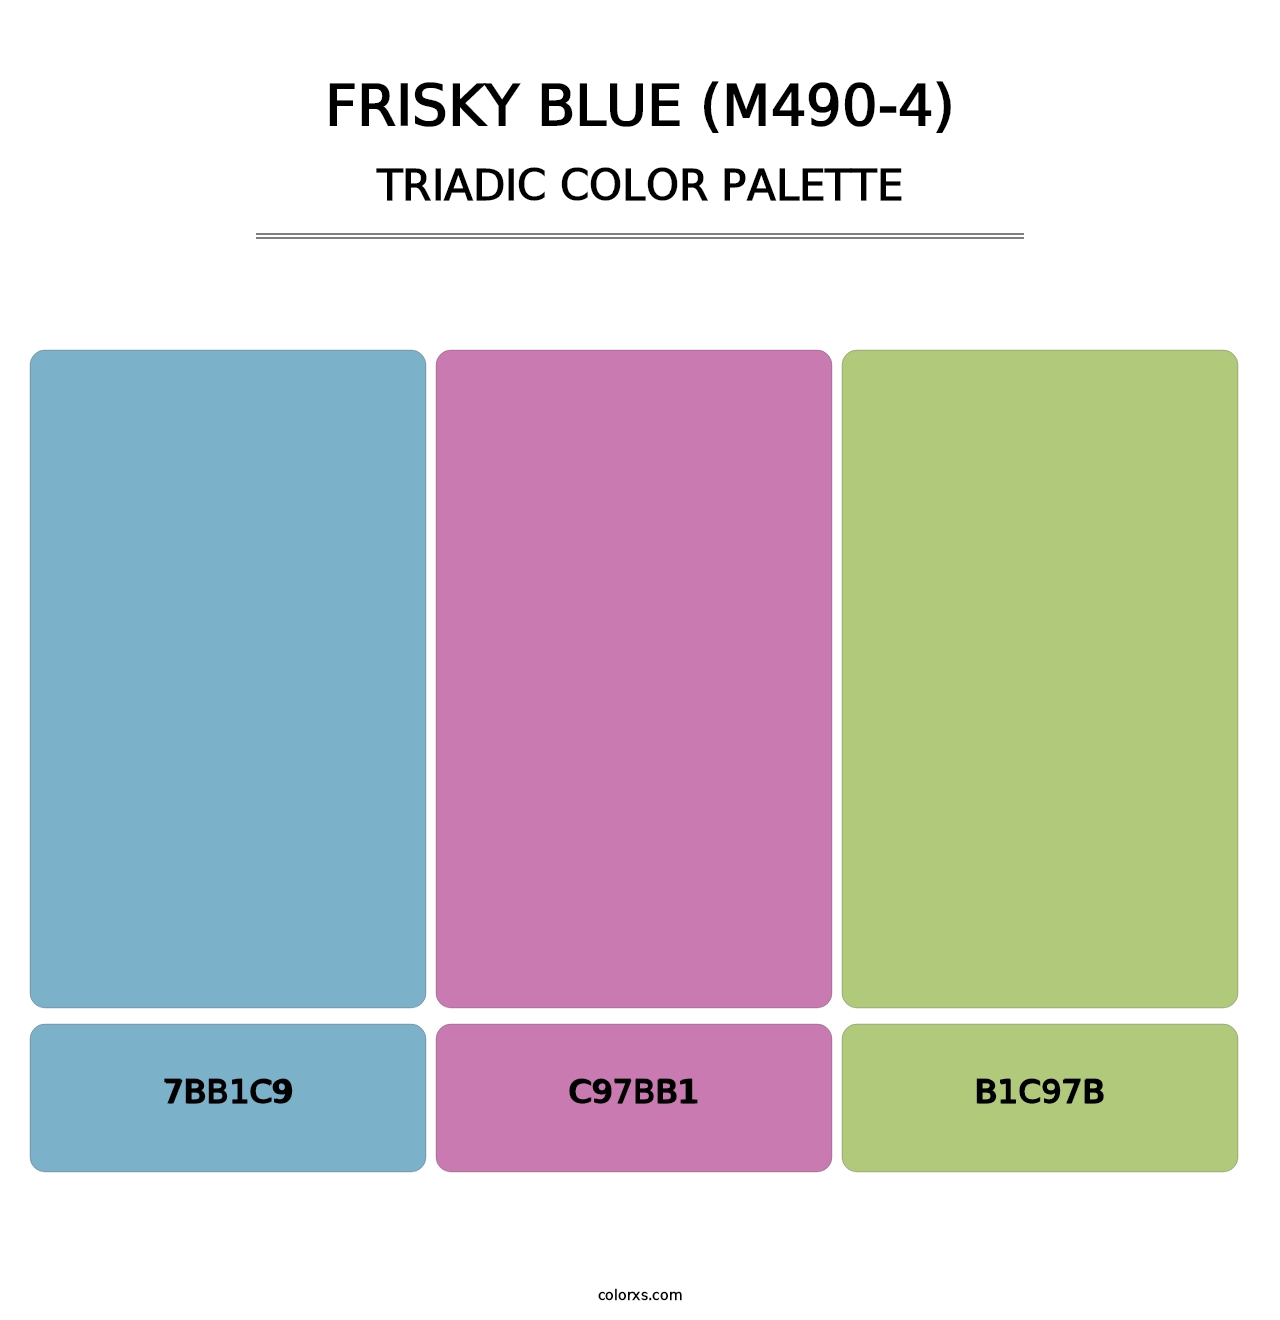 Frisky Blue (M490-4) - Triadic Color Palette